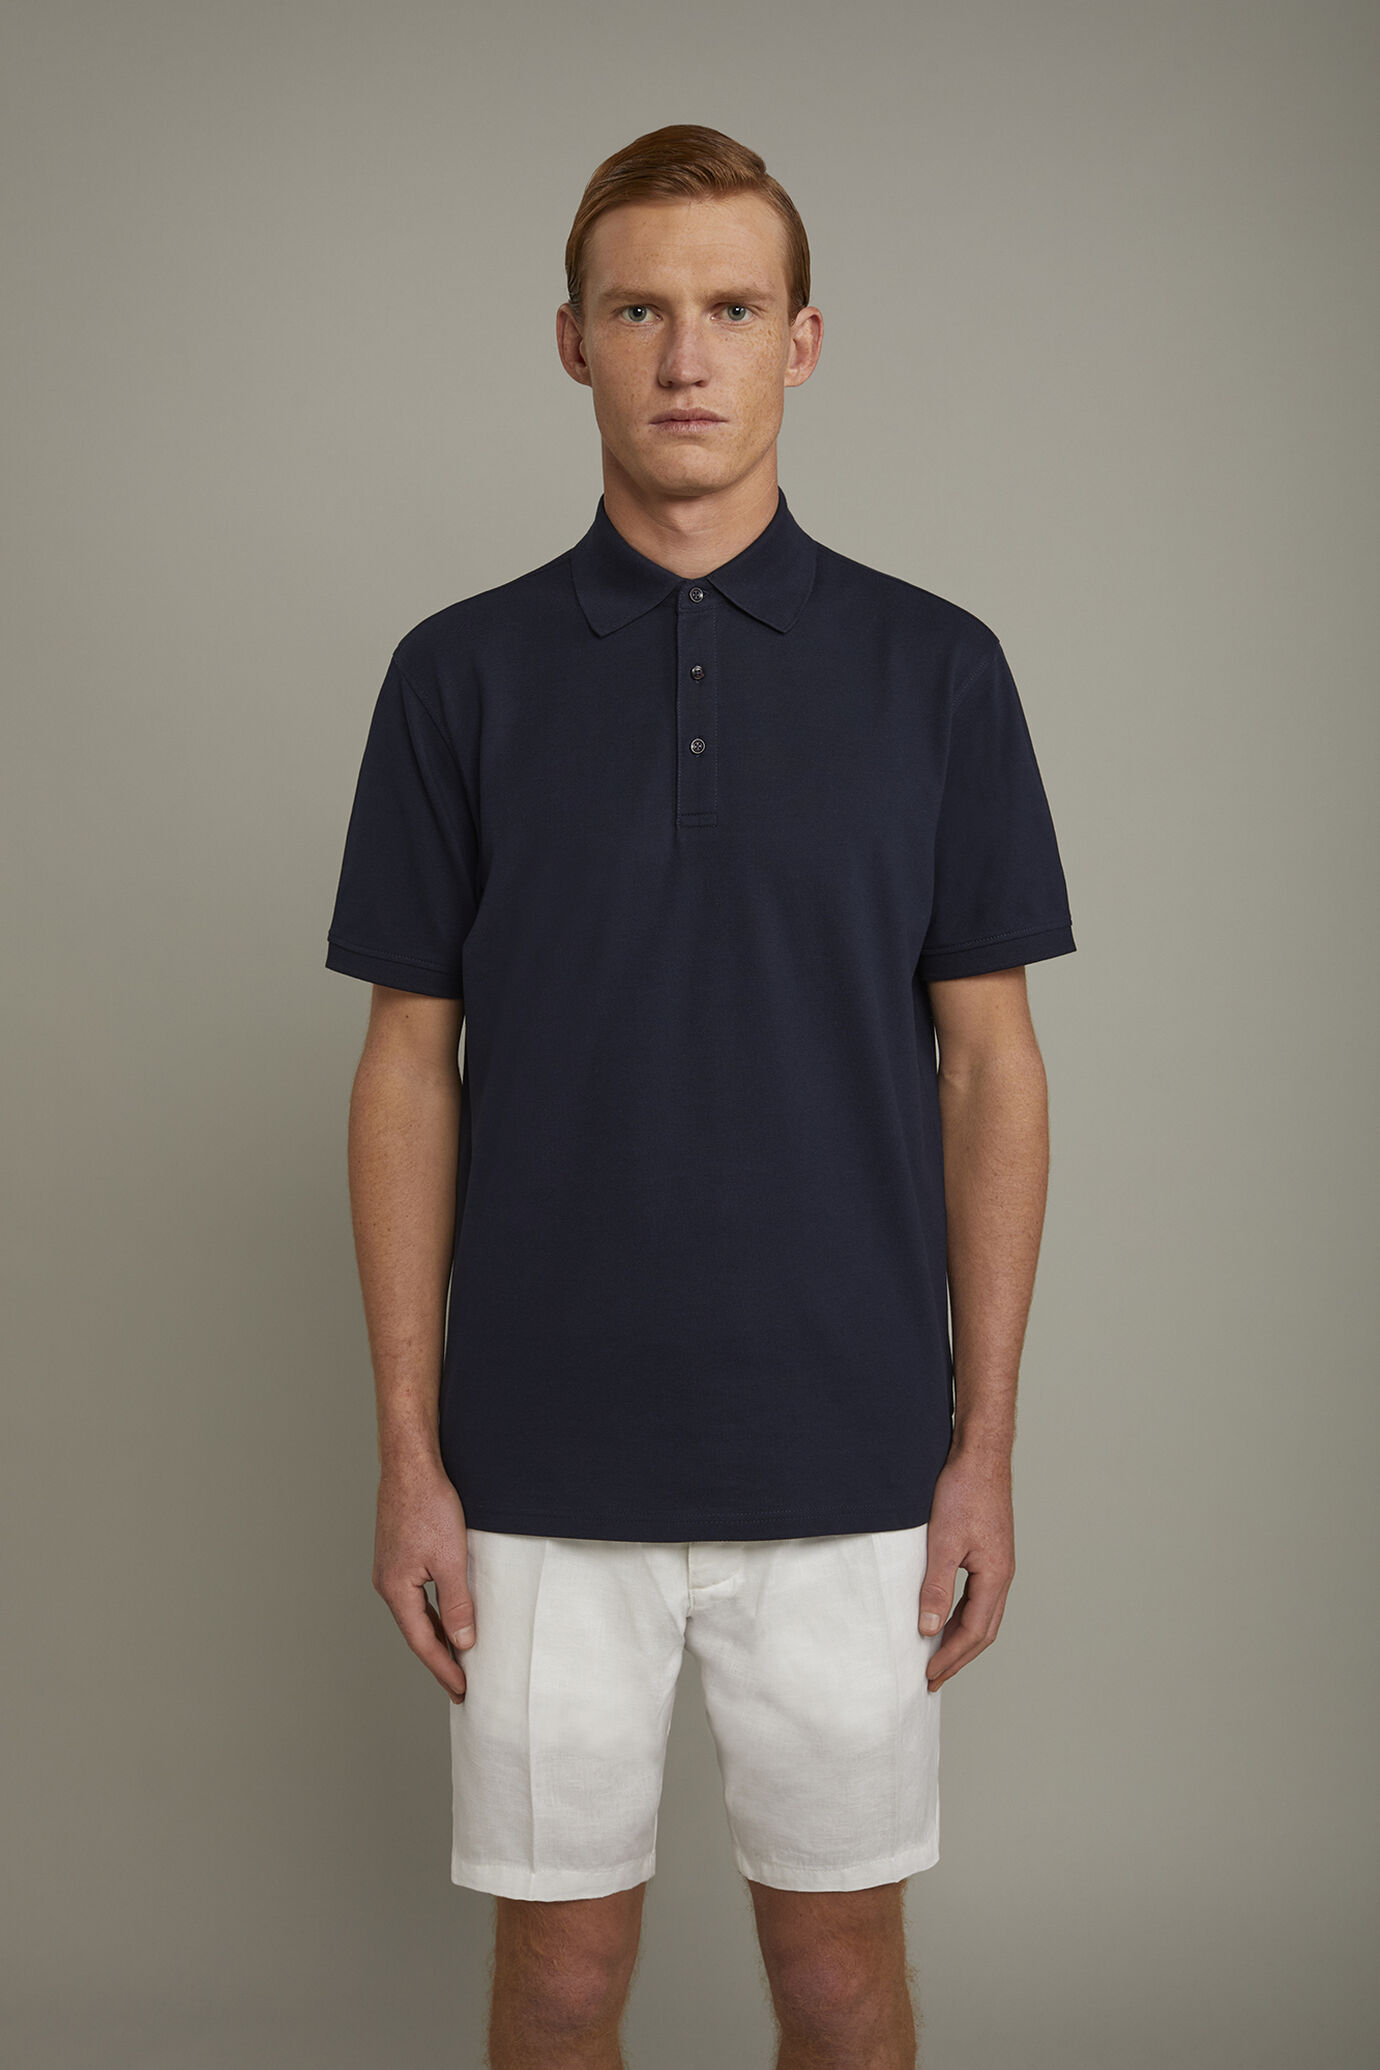 Kurzärmeliges Herren-Poloshirt aus 100 % Baumwolle in normaler Passform